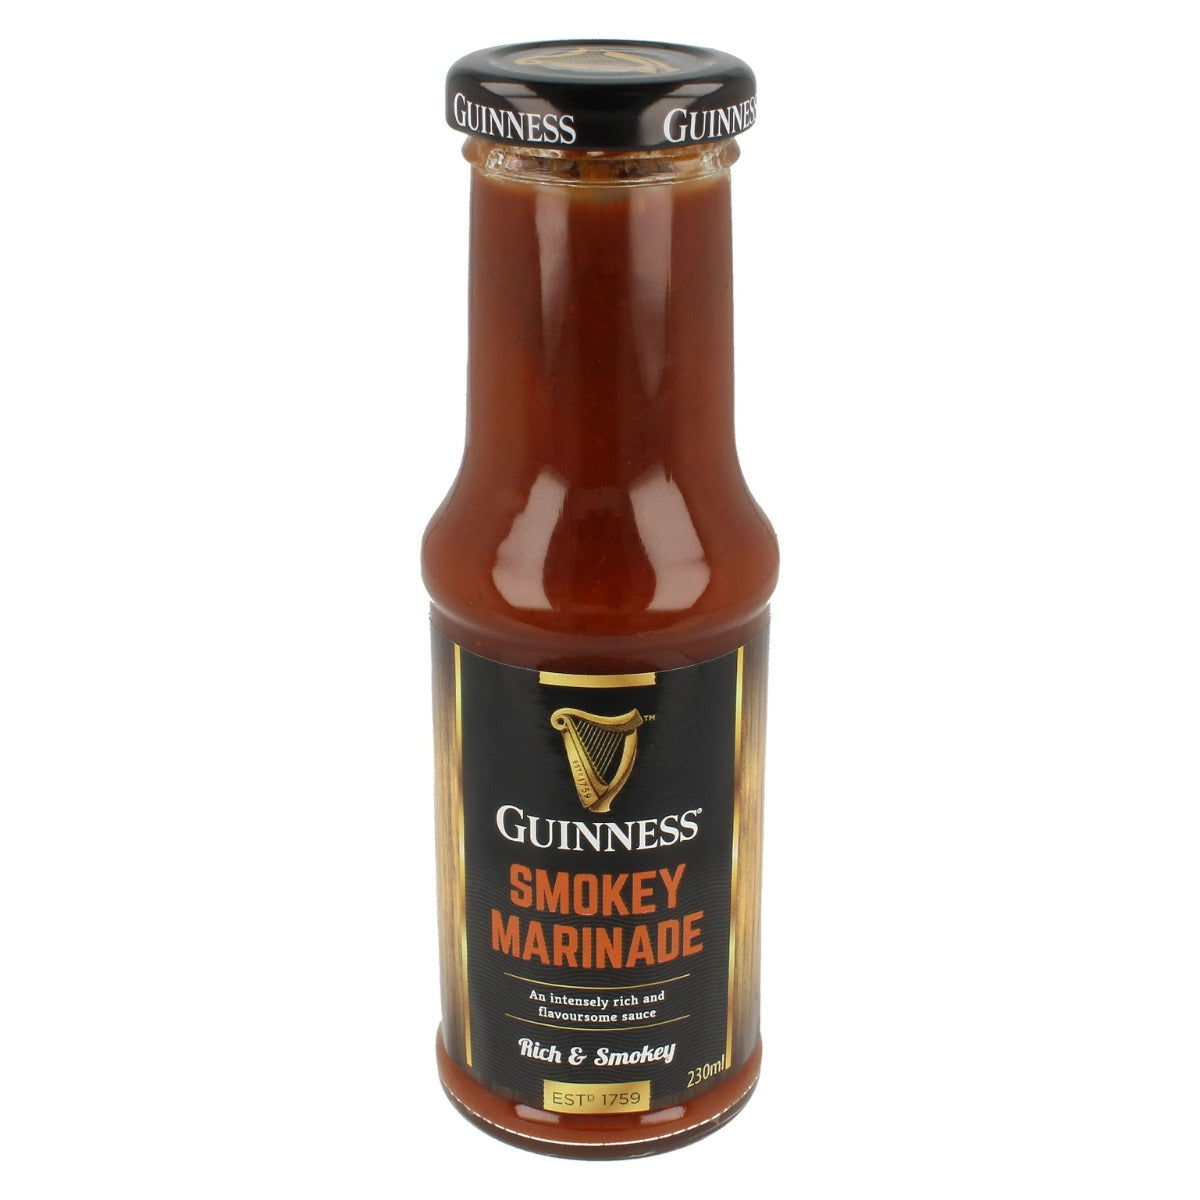 Guinness Smokey Marinade Sauce